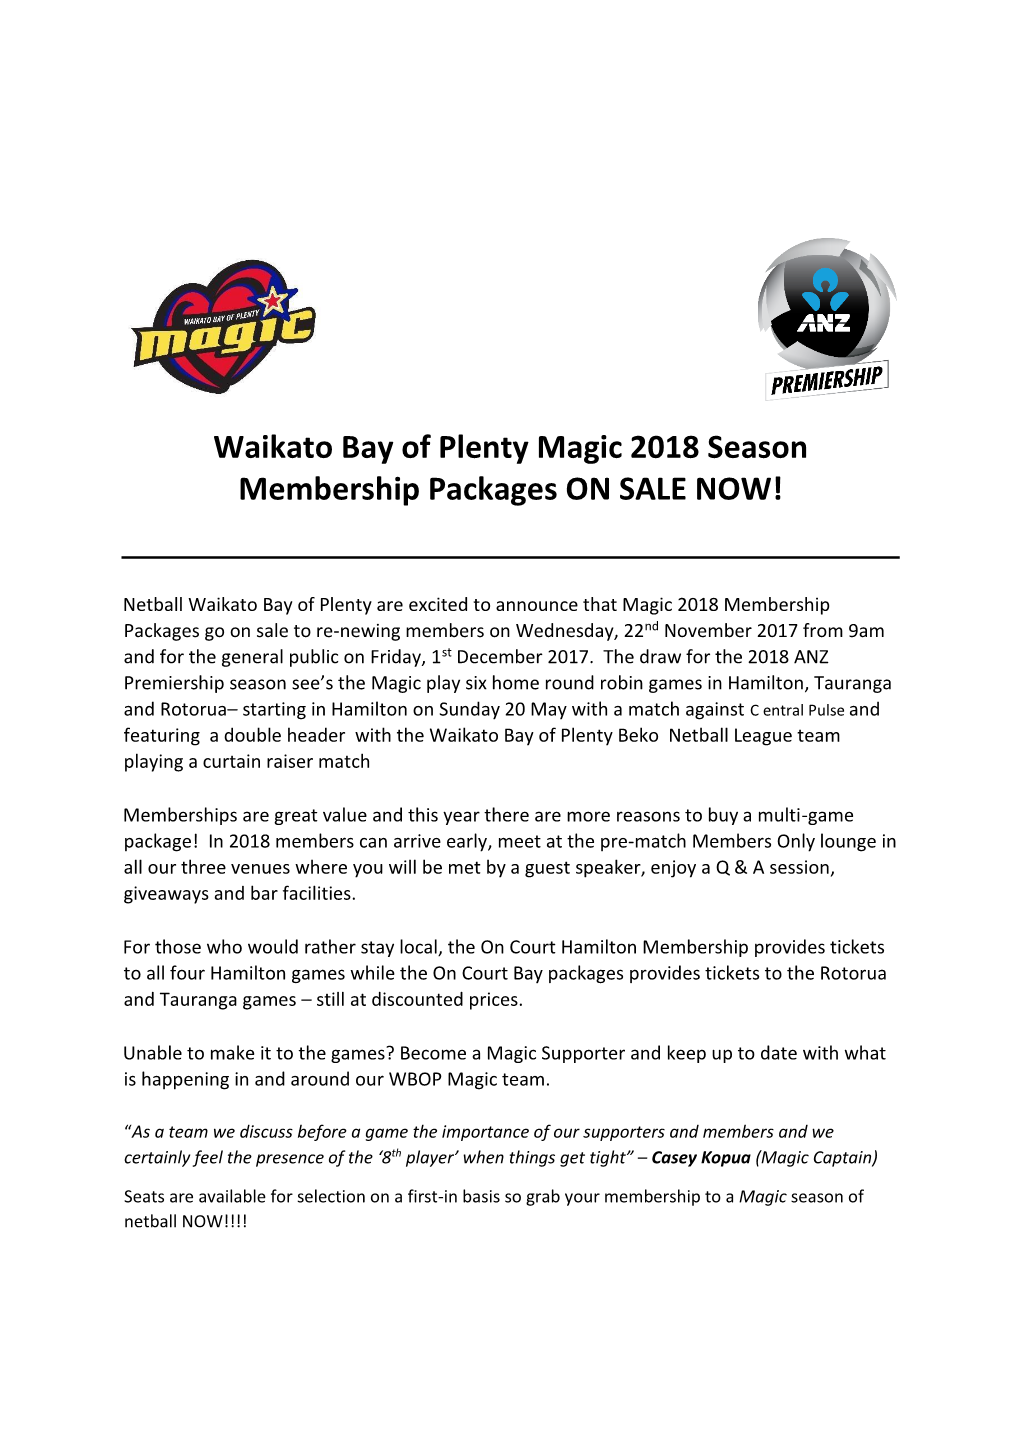 Waikato Bay of Plenty Magic 2018 Season Membership Packages on SALE NOW!